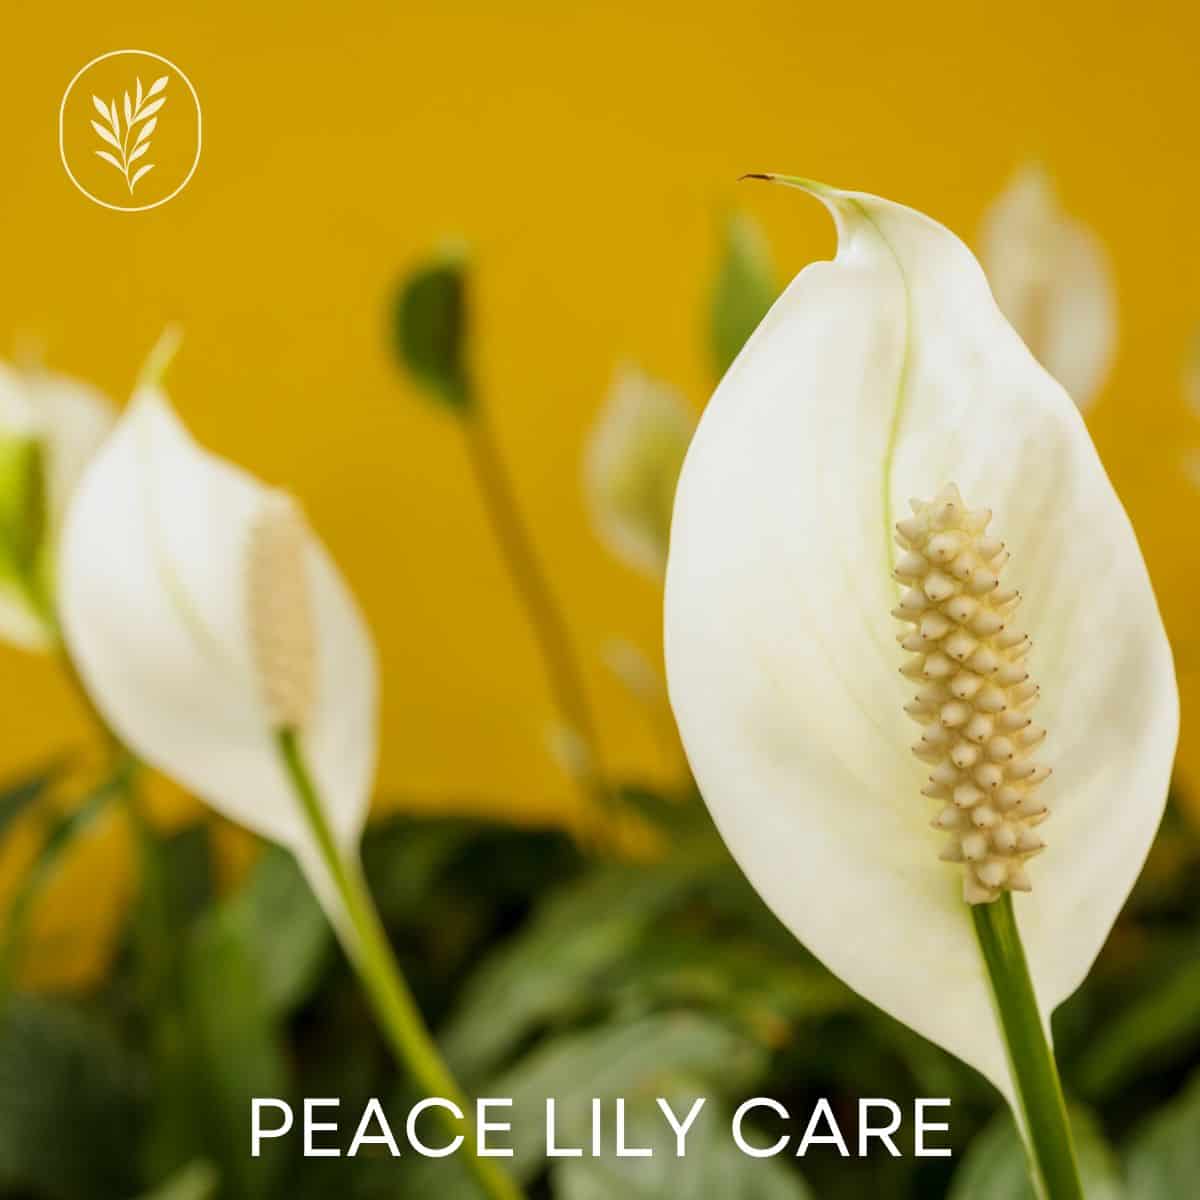 Peace lily care via @home4theharvest